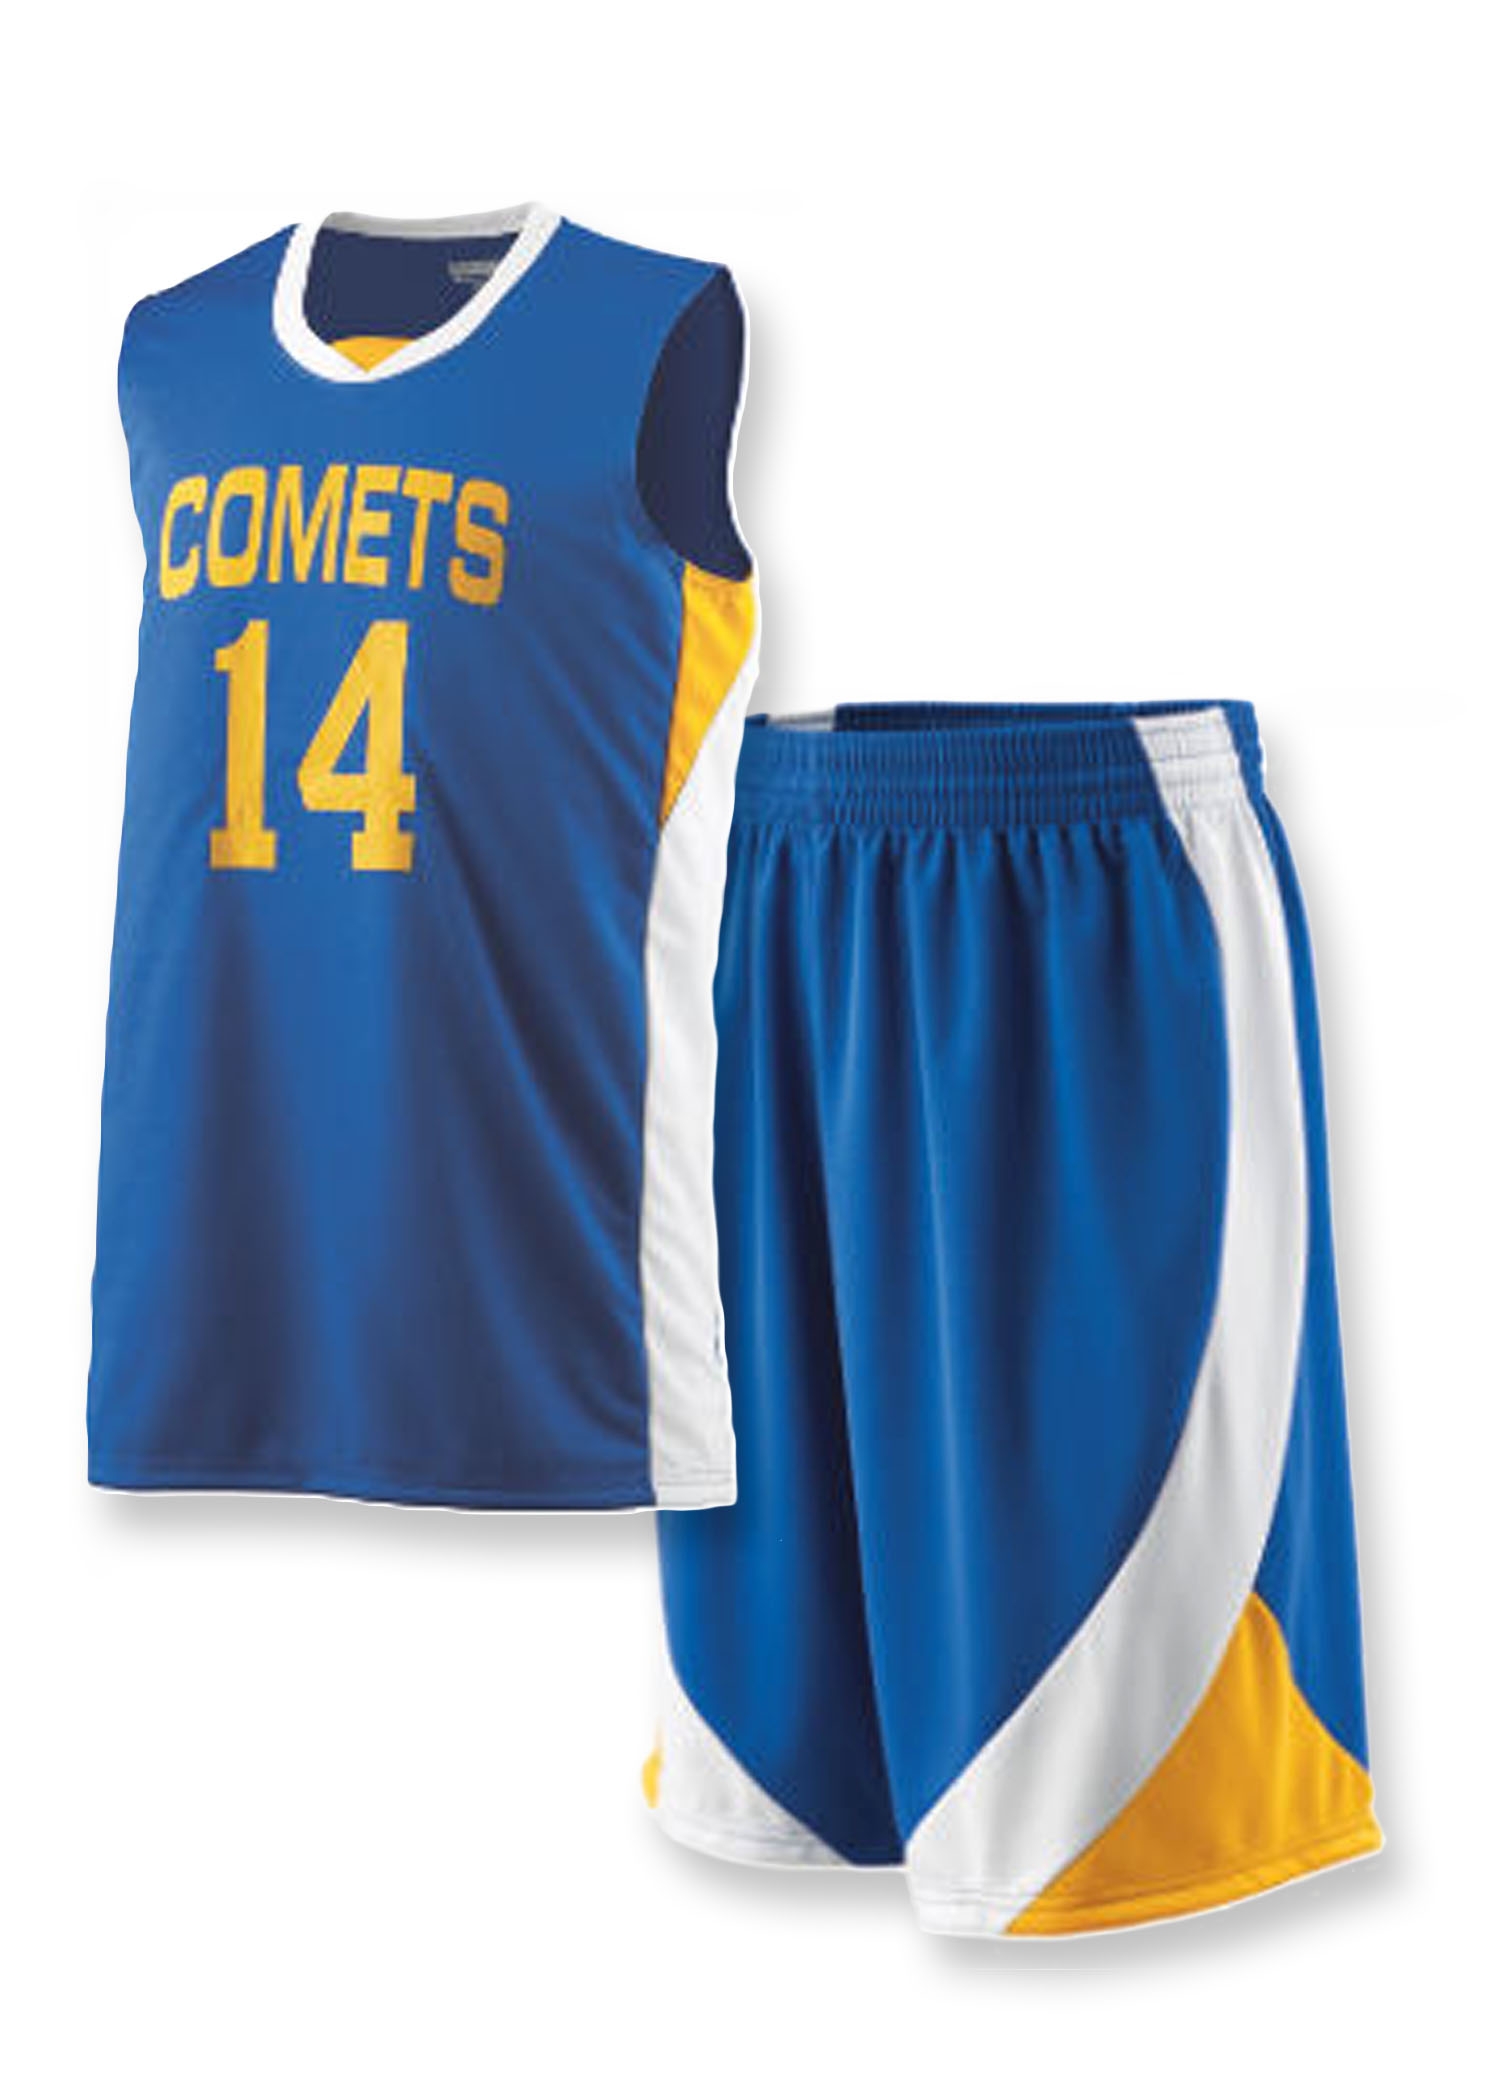 Youth Basketball Uniforms, Youth Basketball Jerseys, Shorts